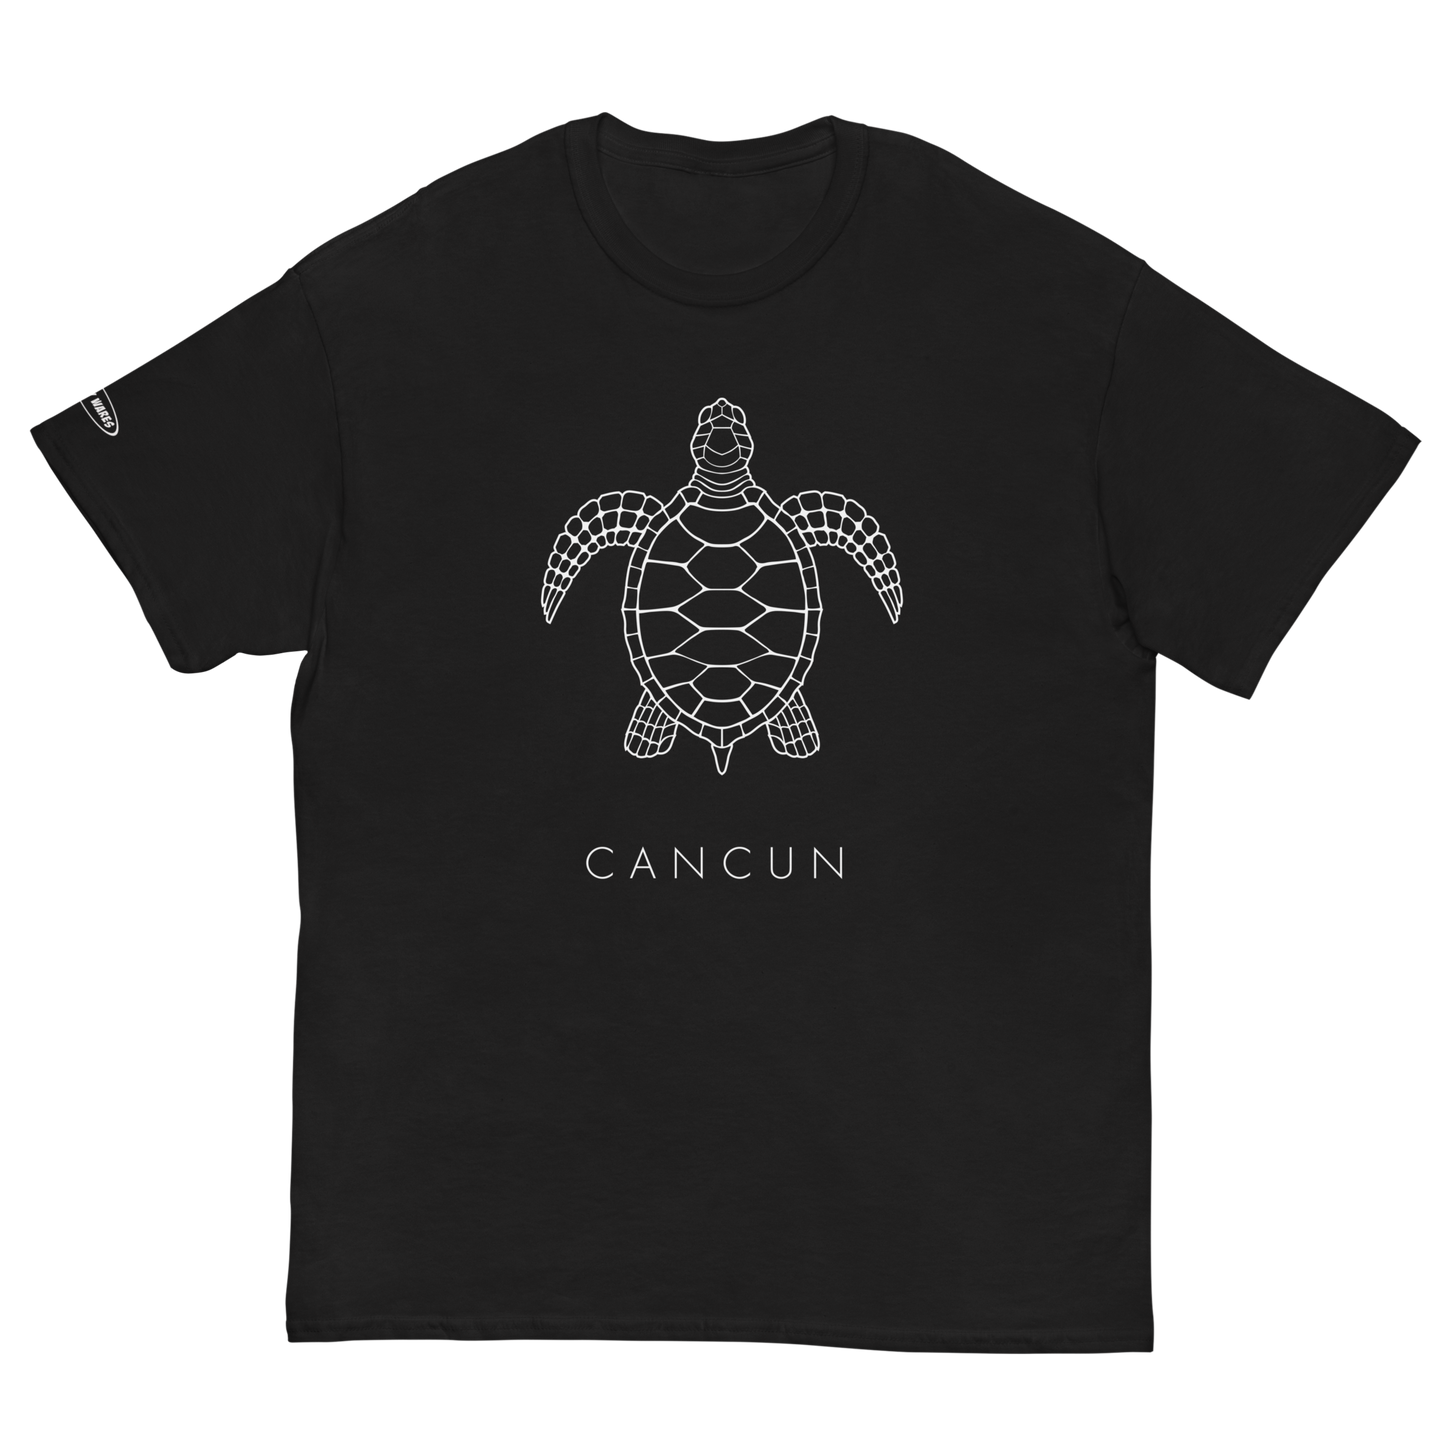 Unisex - CANCUN - Iconic Sea Turtle T-Shirt